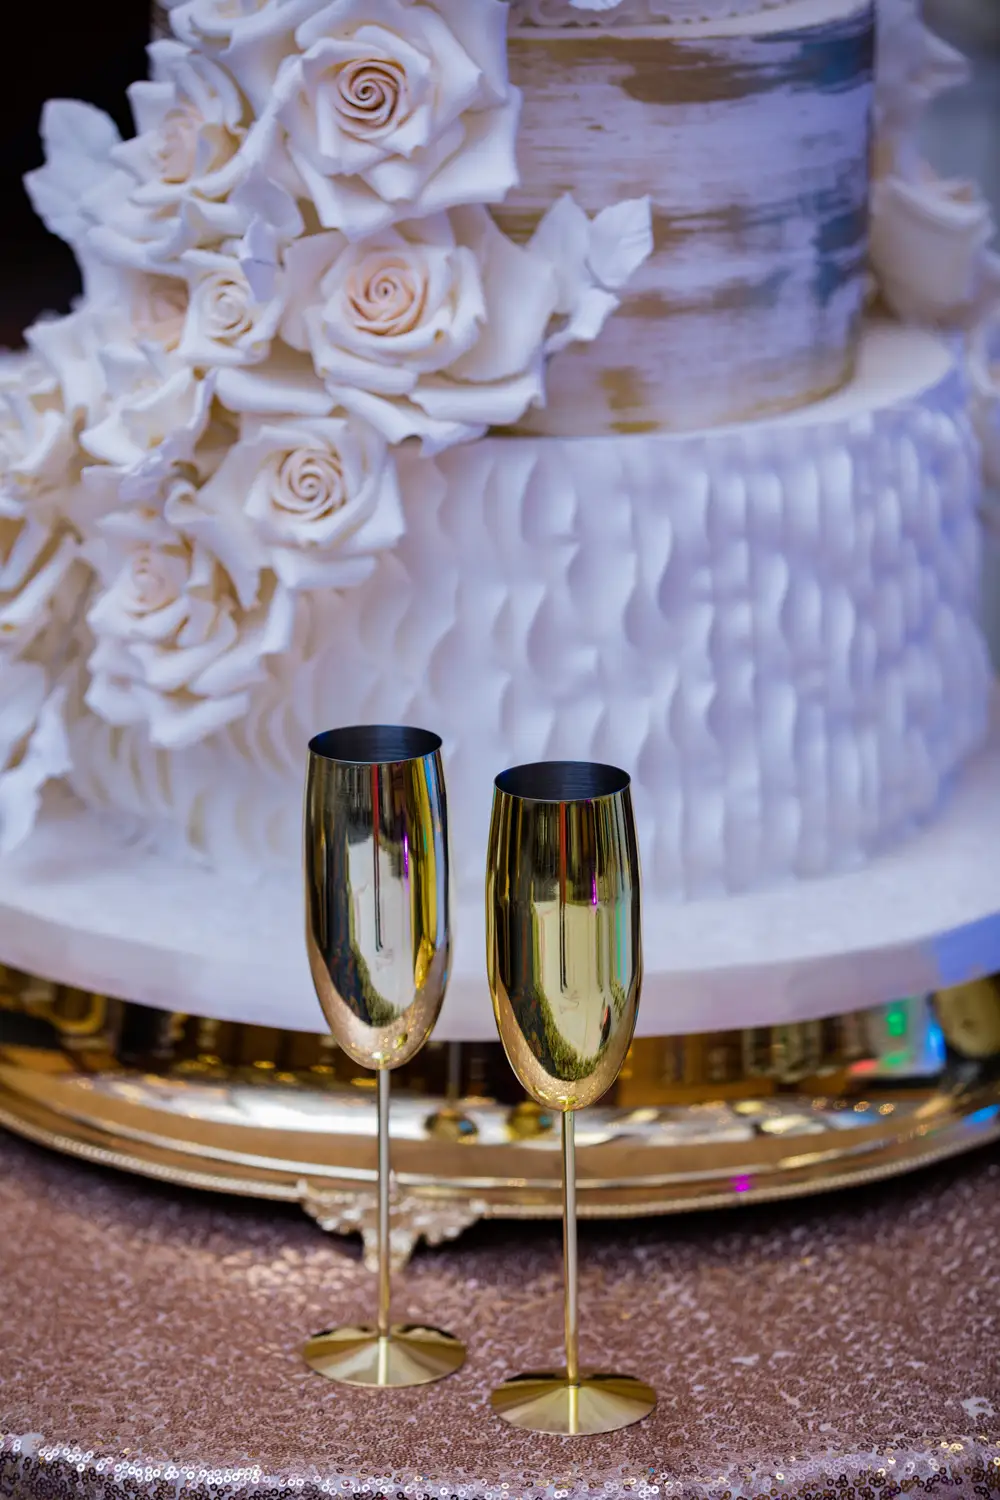 Wedding cake and wine glass